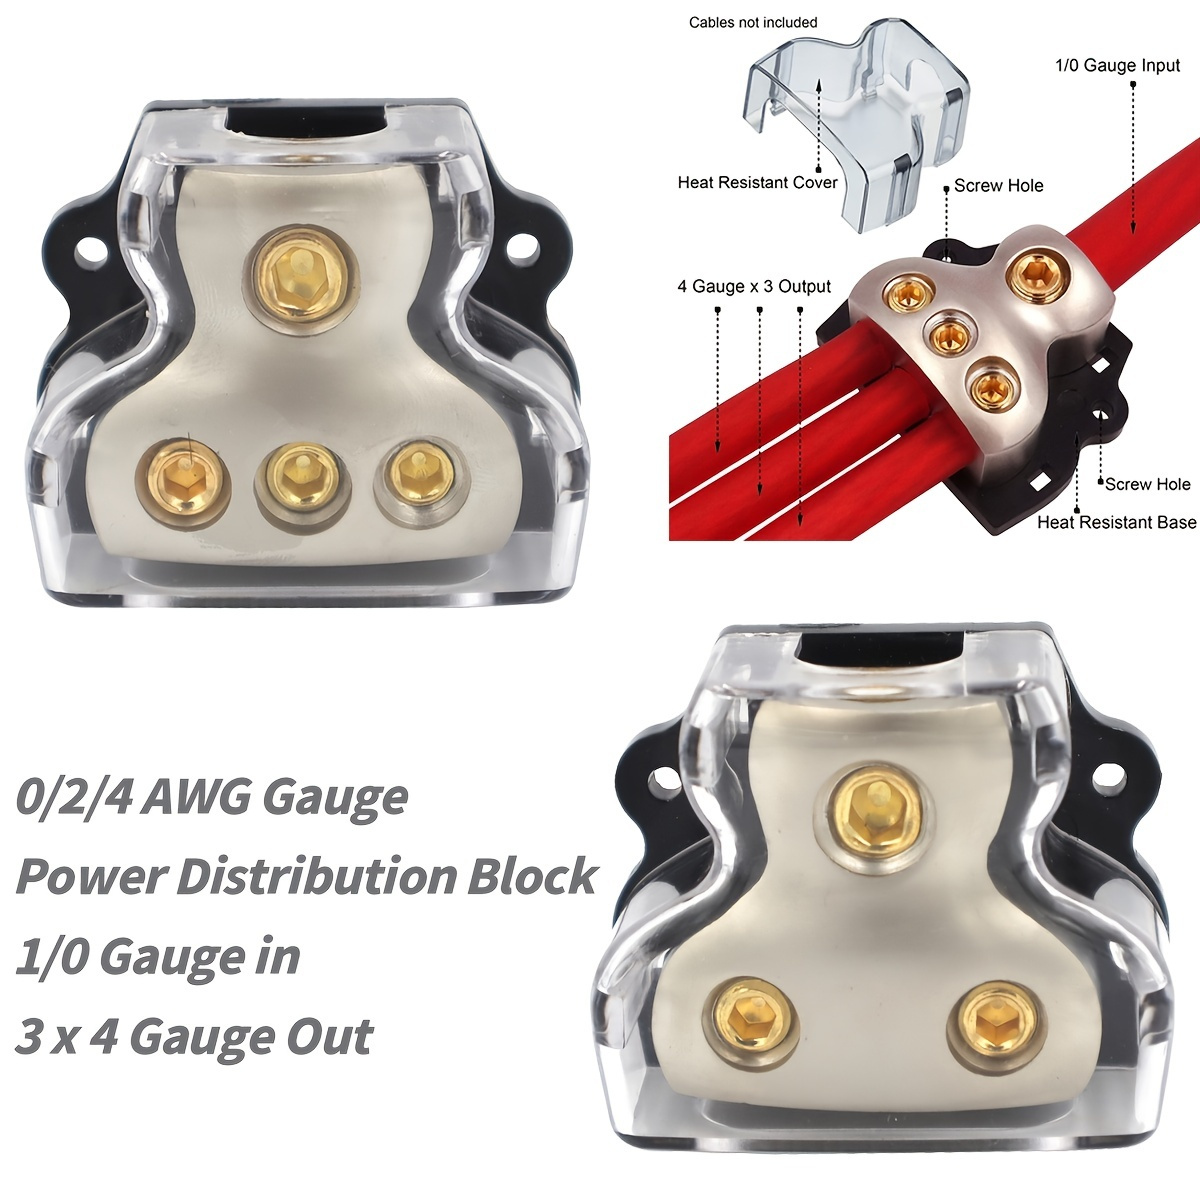 

0/2/4 Awg Gauge Power Distribution Block, 1/0 Gauge In -3 X 4 Gauge Out Amp Power Distribution Block For Car Audio Splitter